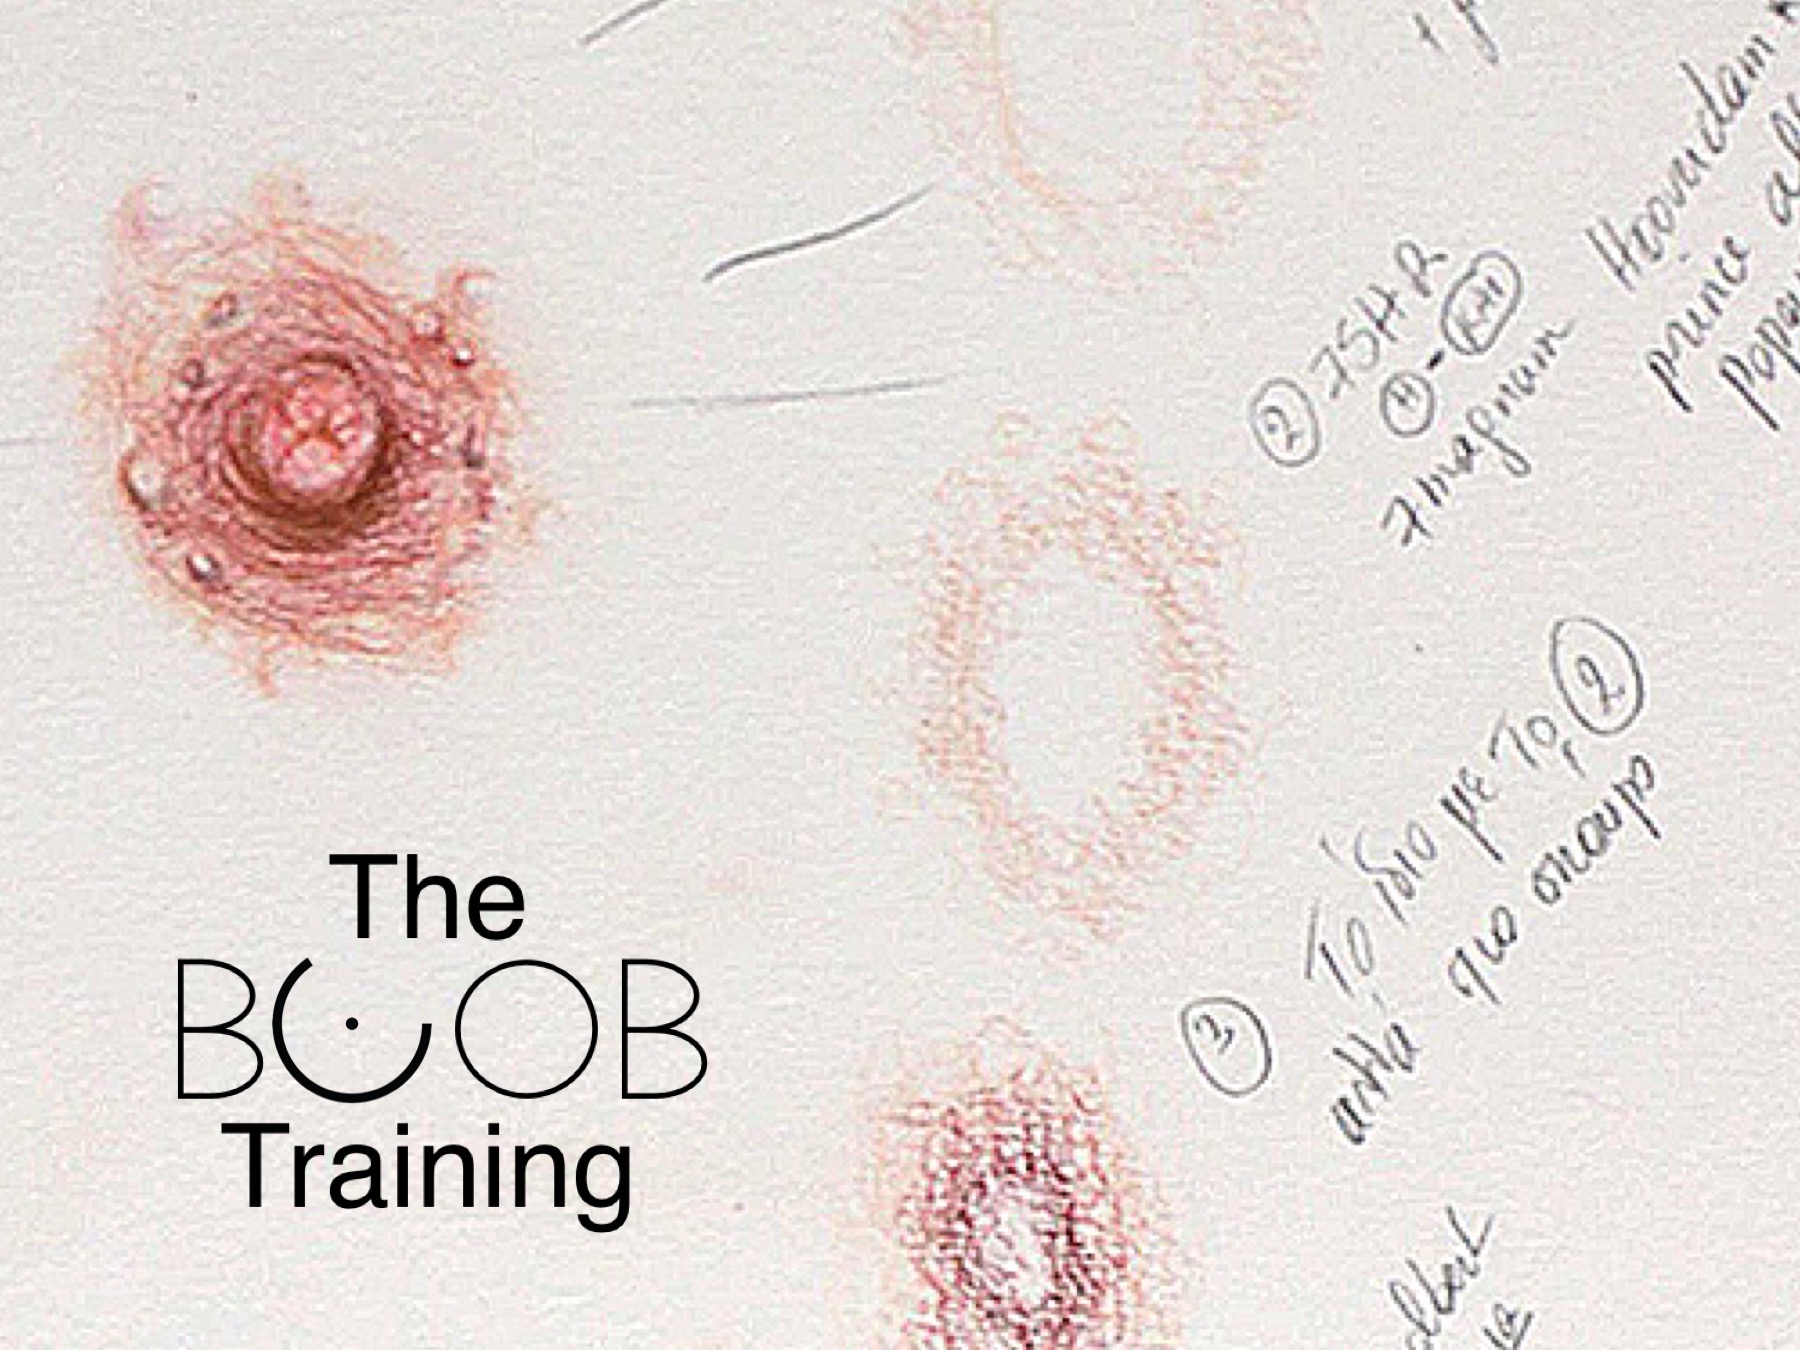 The Boob Training